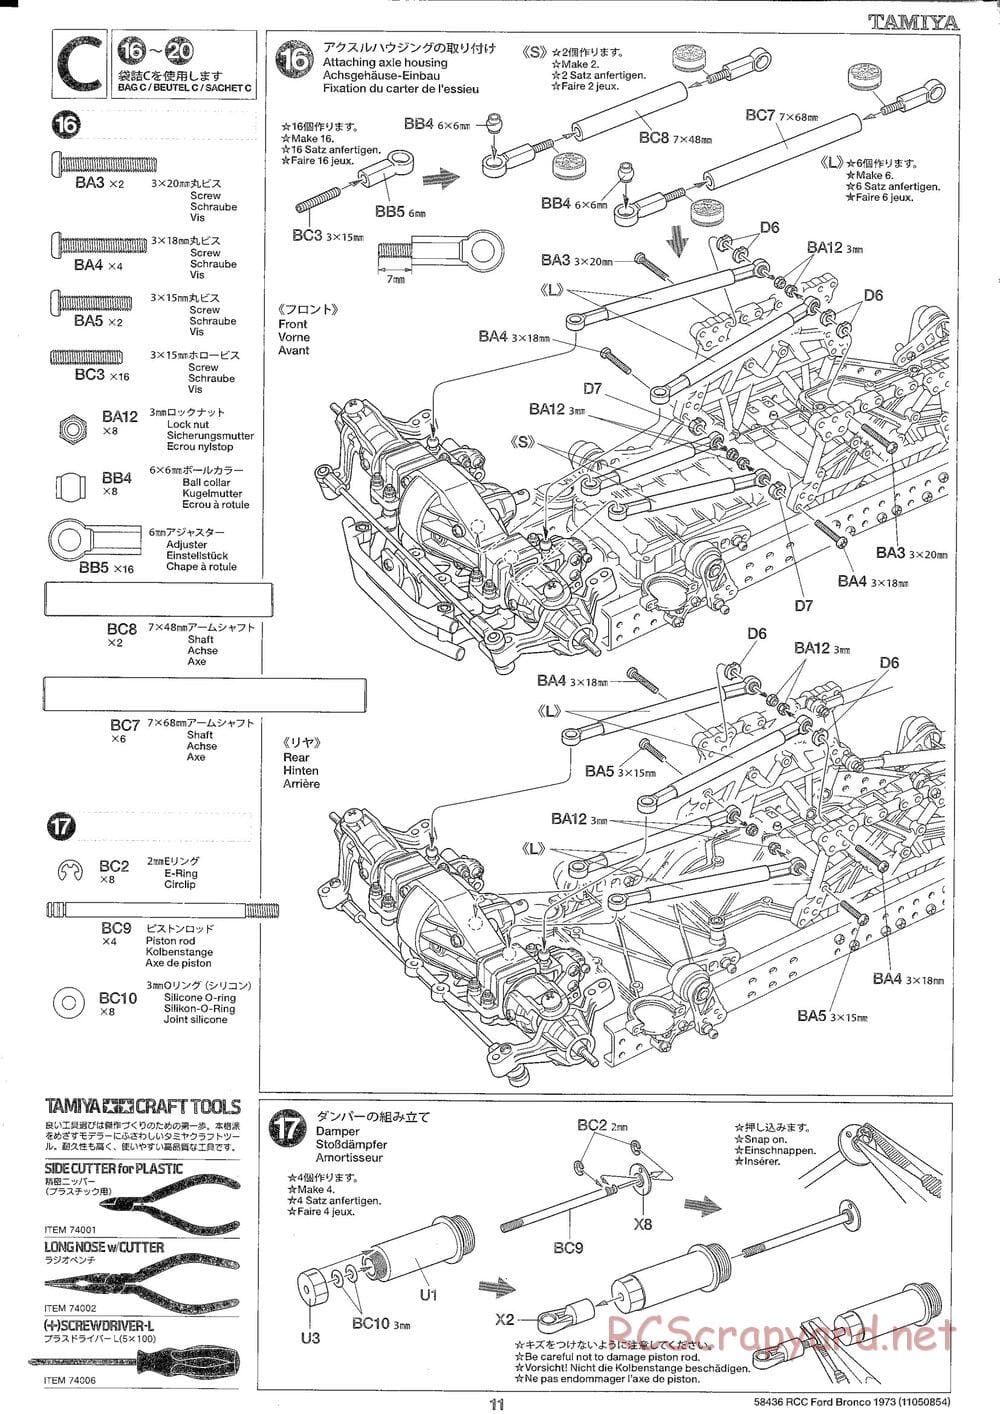 Tamiya - Ford Bronco 1973 - CR-01 Chassis - Manual - Page 11